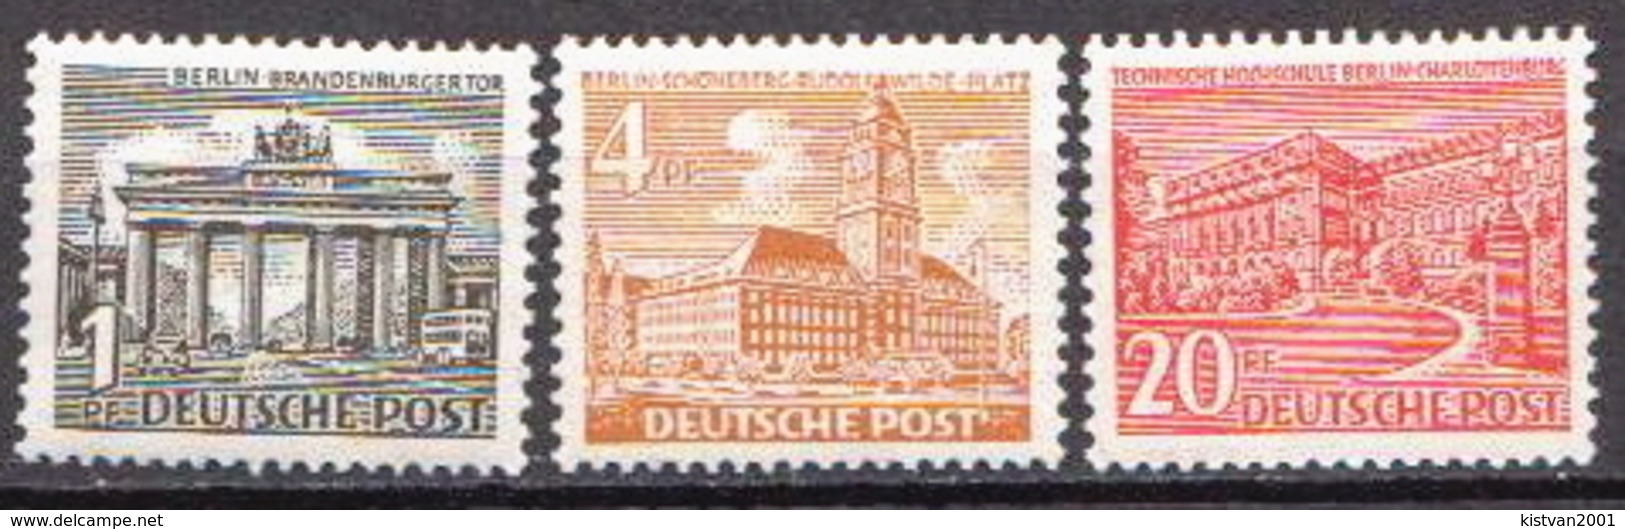 Germany / Berlin MNH Stamps - Nuovi